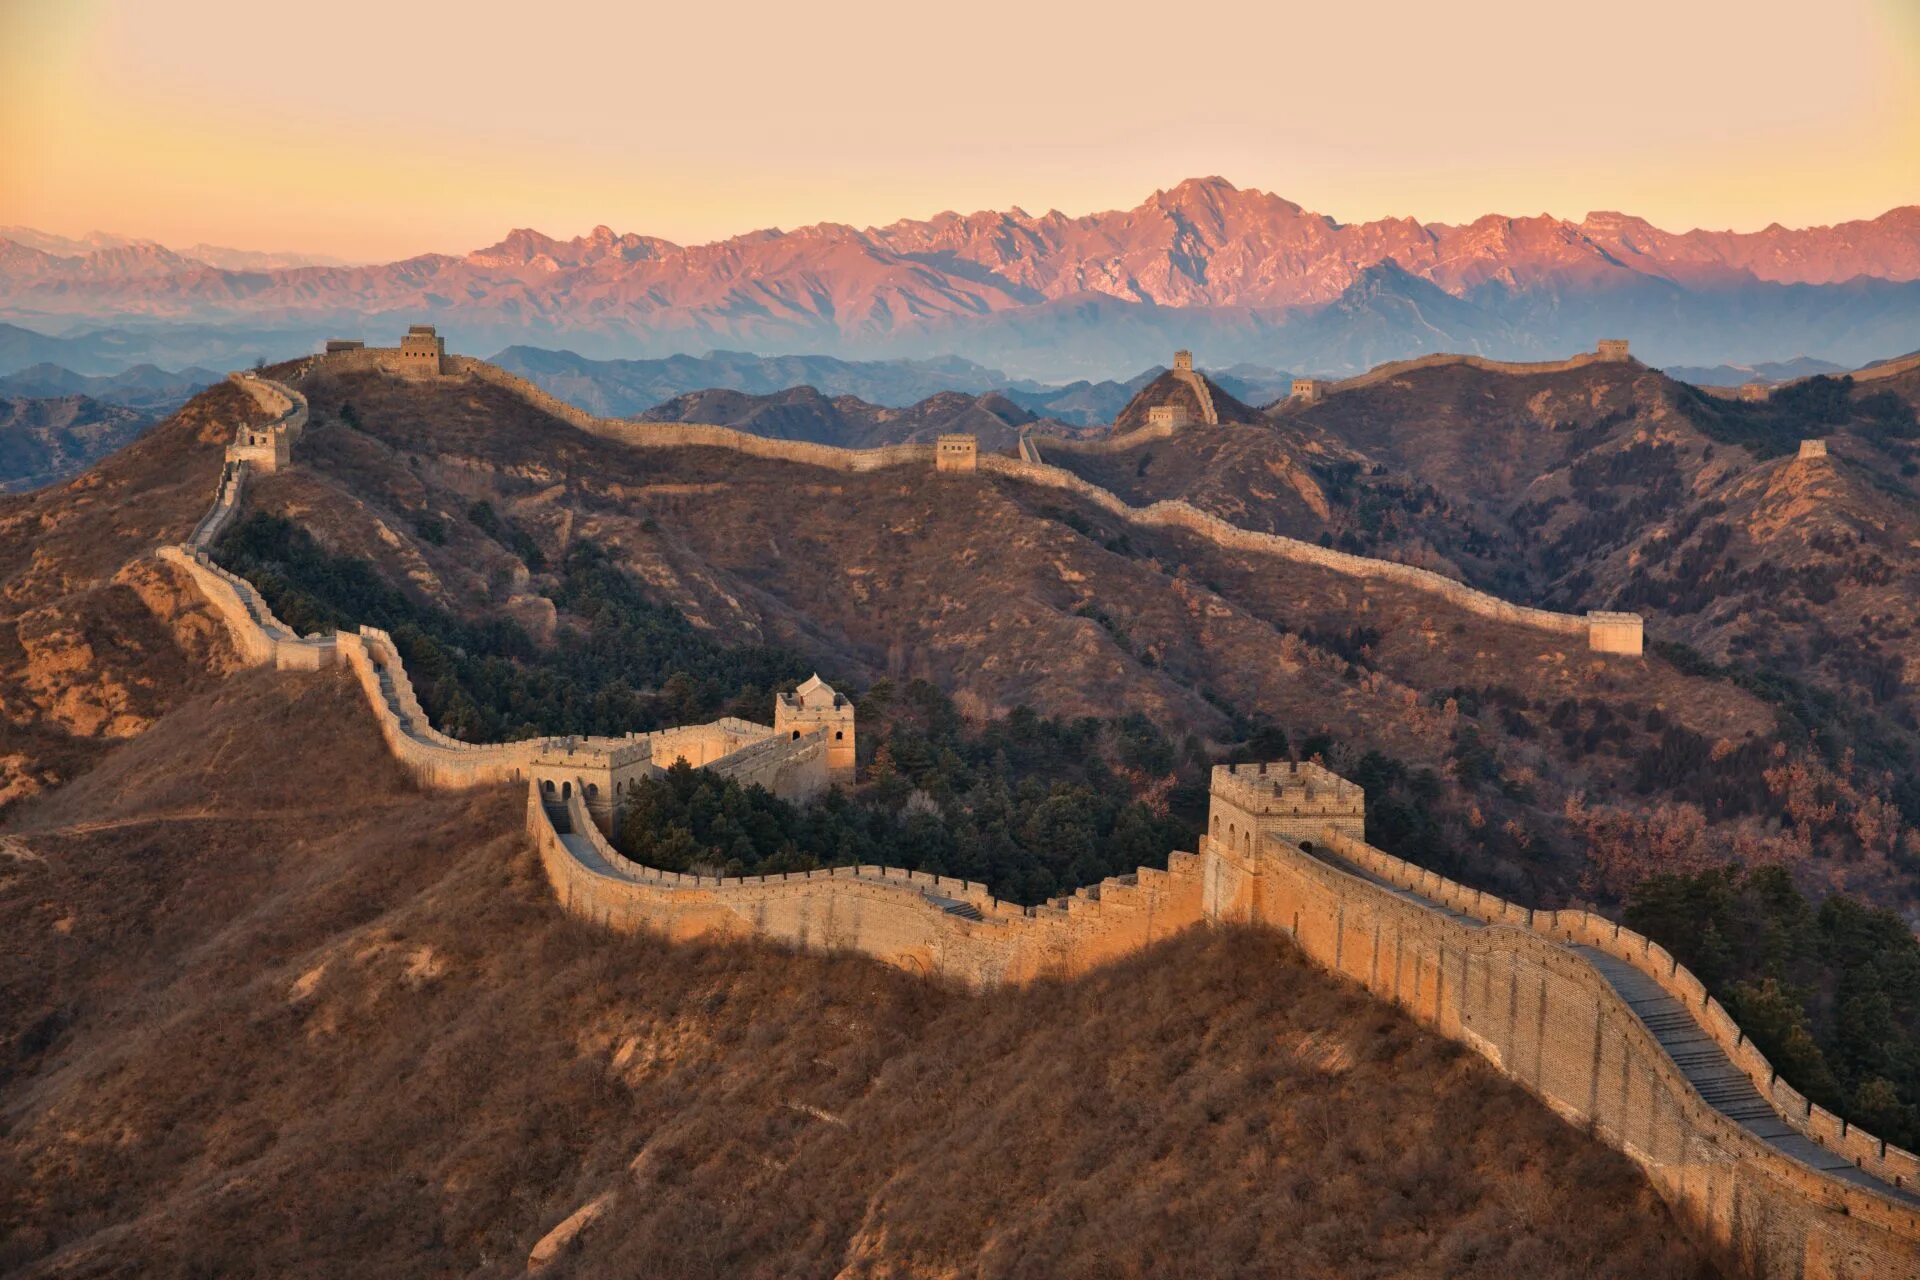 Края китайской стены. Великая китайская стена цинхай. Великая китайская стена Хубэй. Великая китайская стена 2022г. Конец Великой китайской стены.